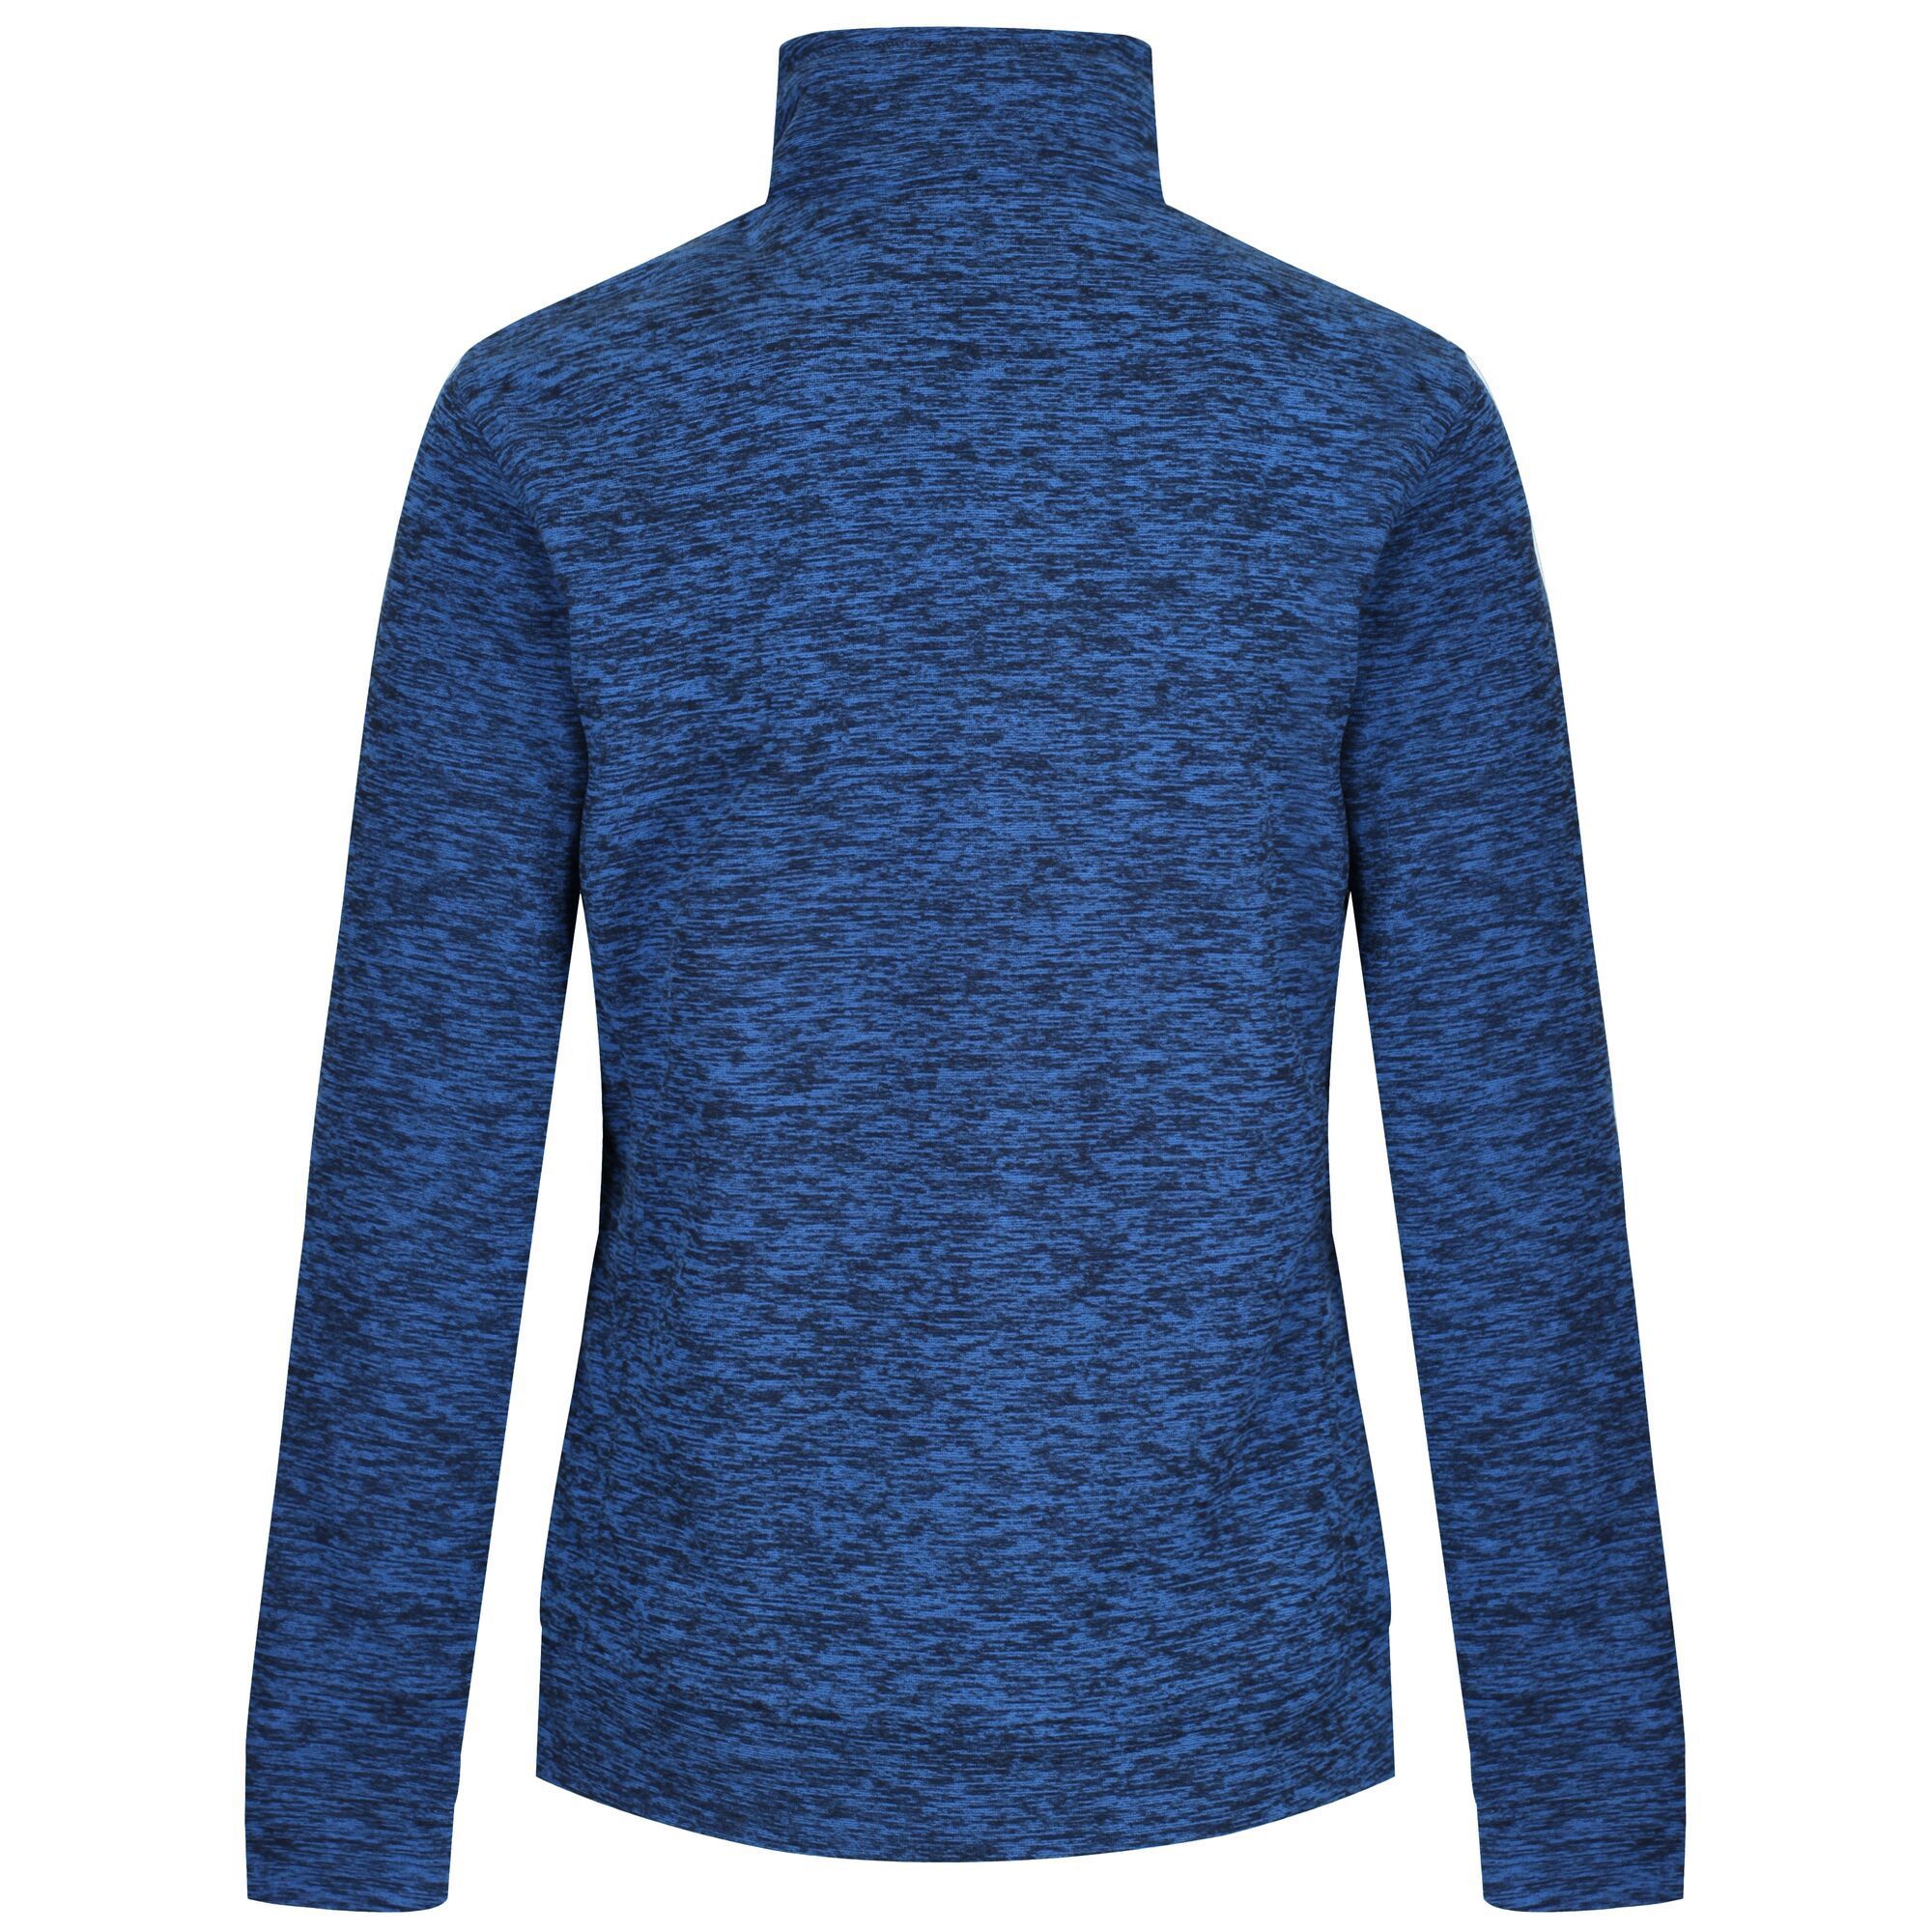 100% polyester marl knit effect fleece. 1 side anti-pill symmetry fleece. Quick drying. Chin guard. 2 zipped lower pockets. Self fabric cuffs.